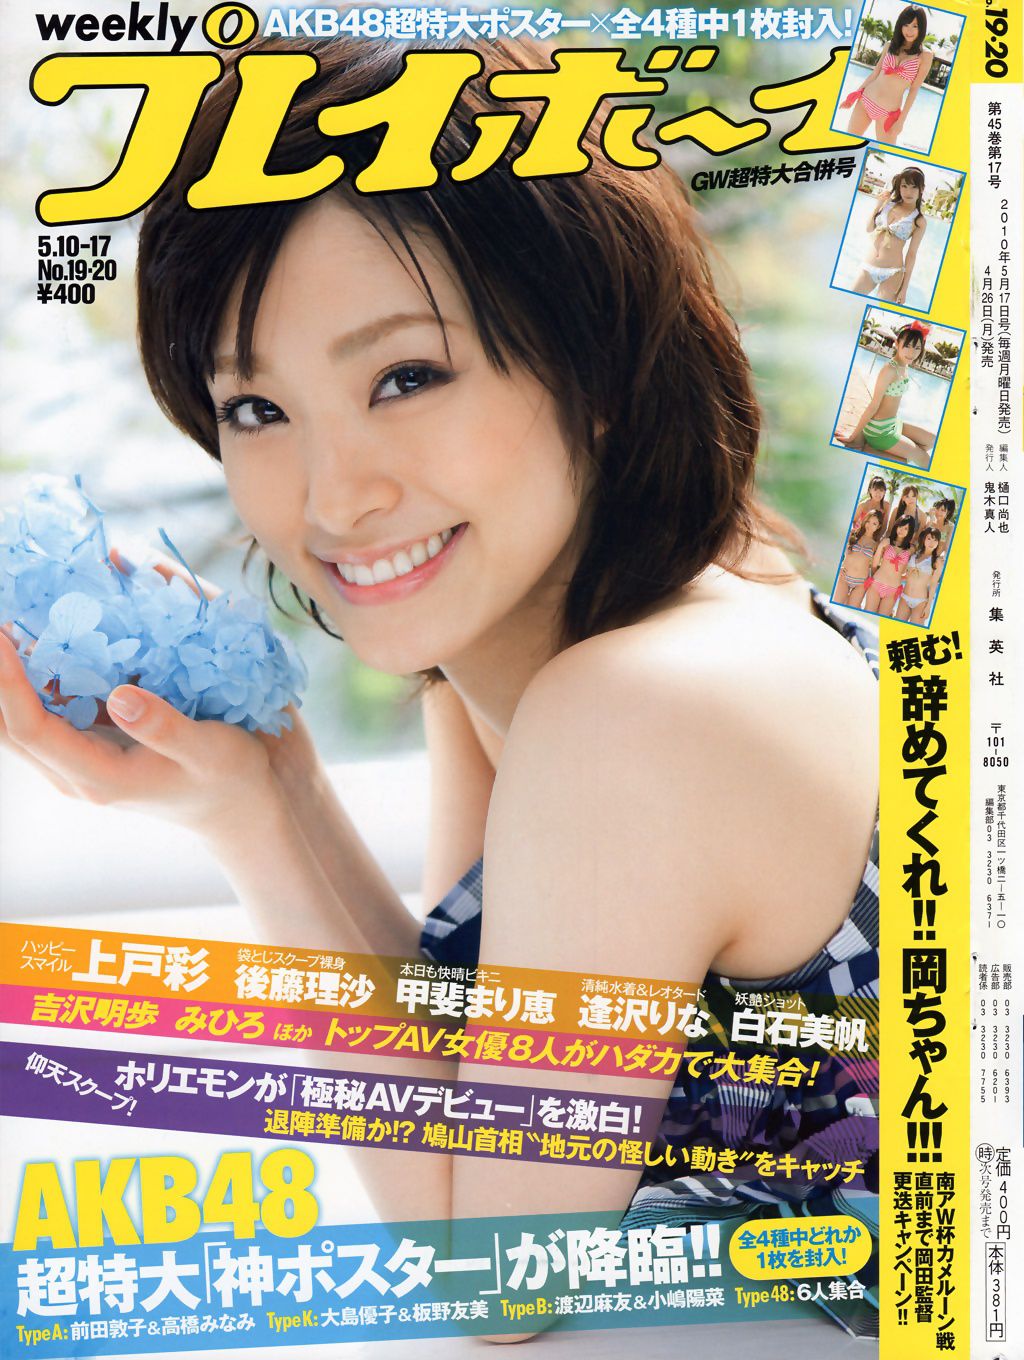 [Weekly Playboy] 2010年No.19-20 写真杂志